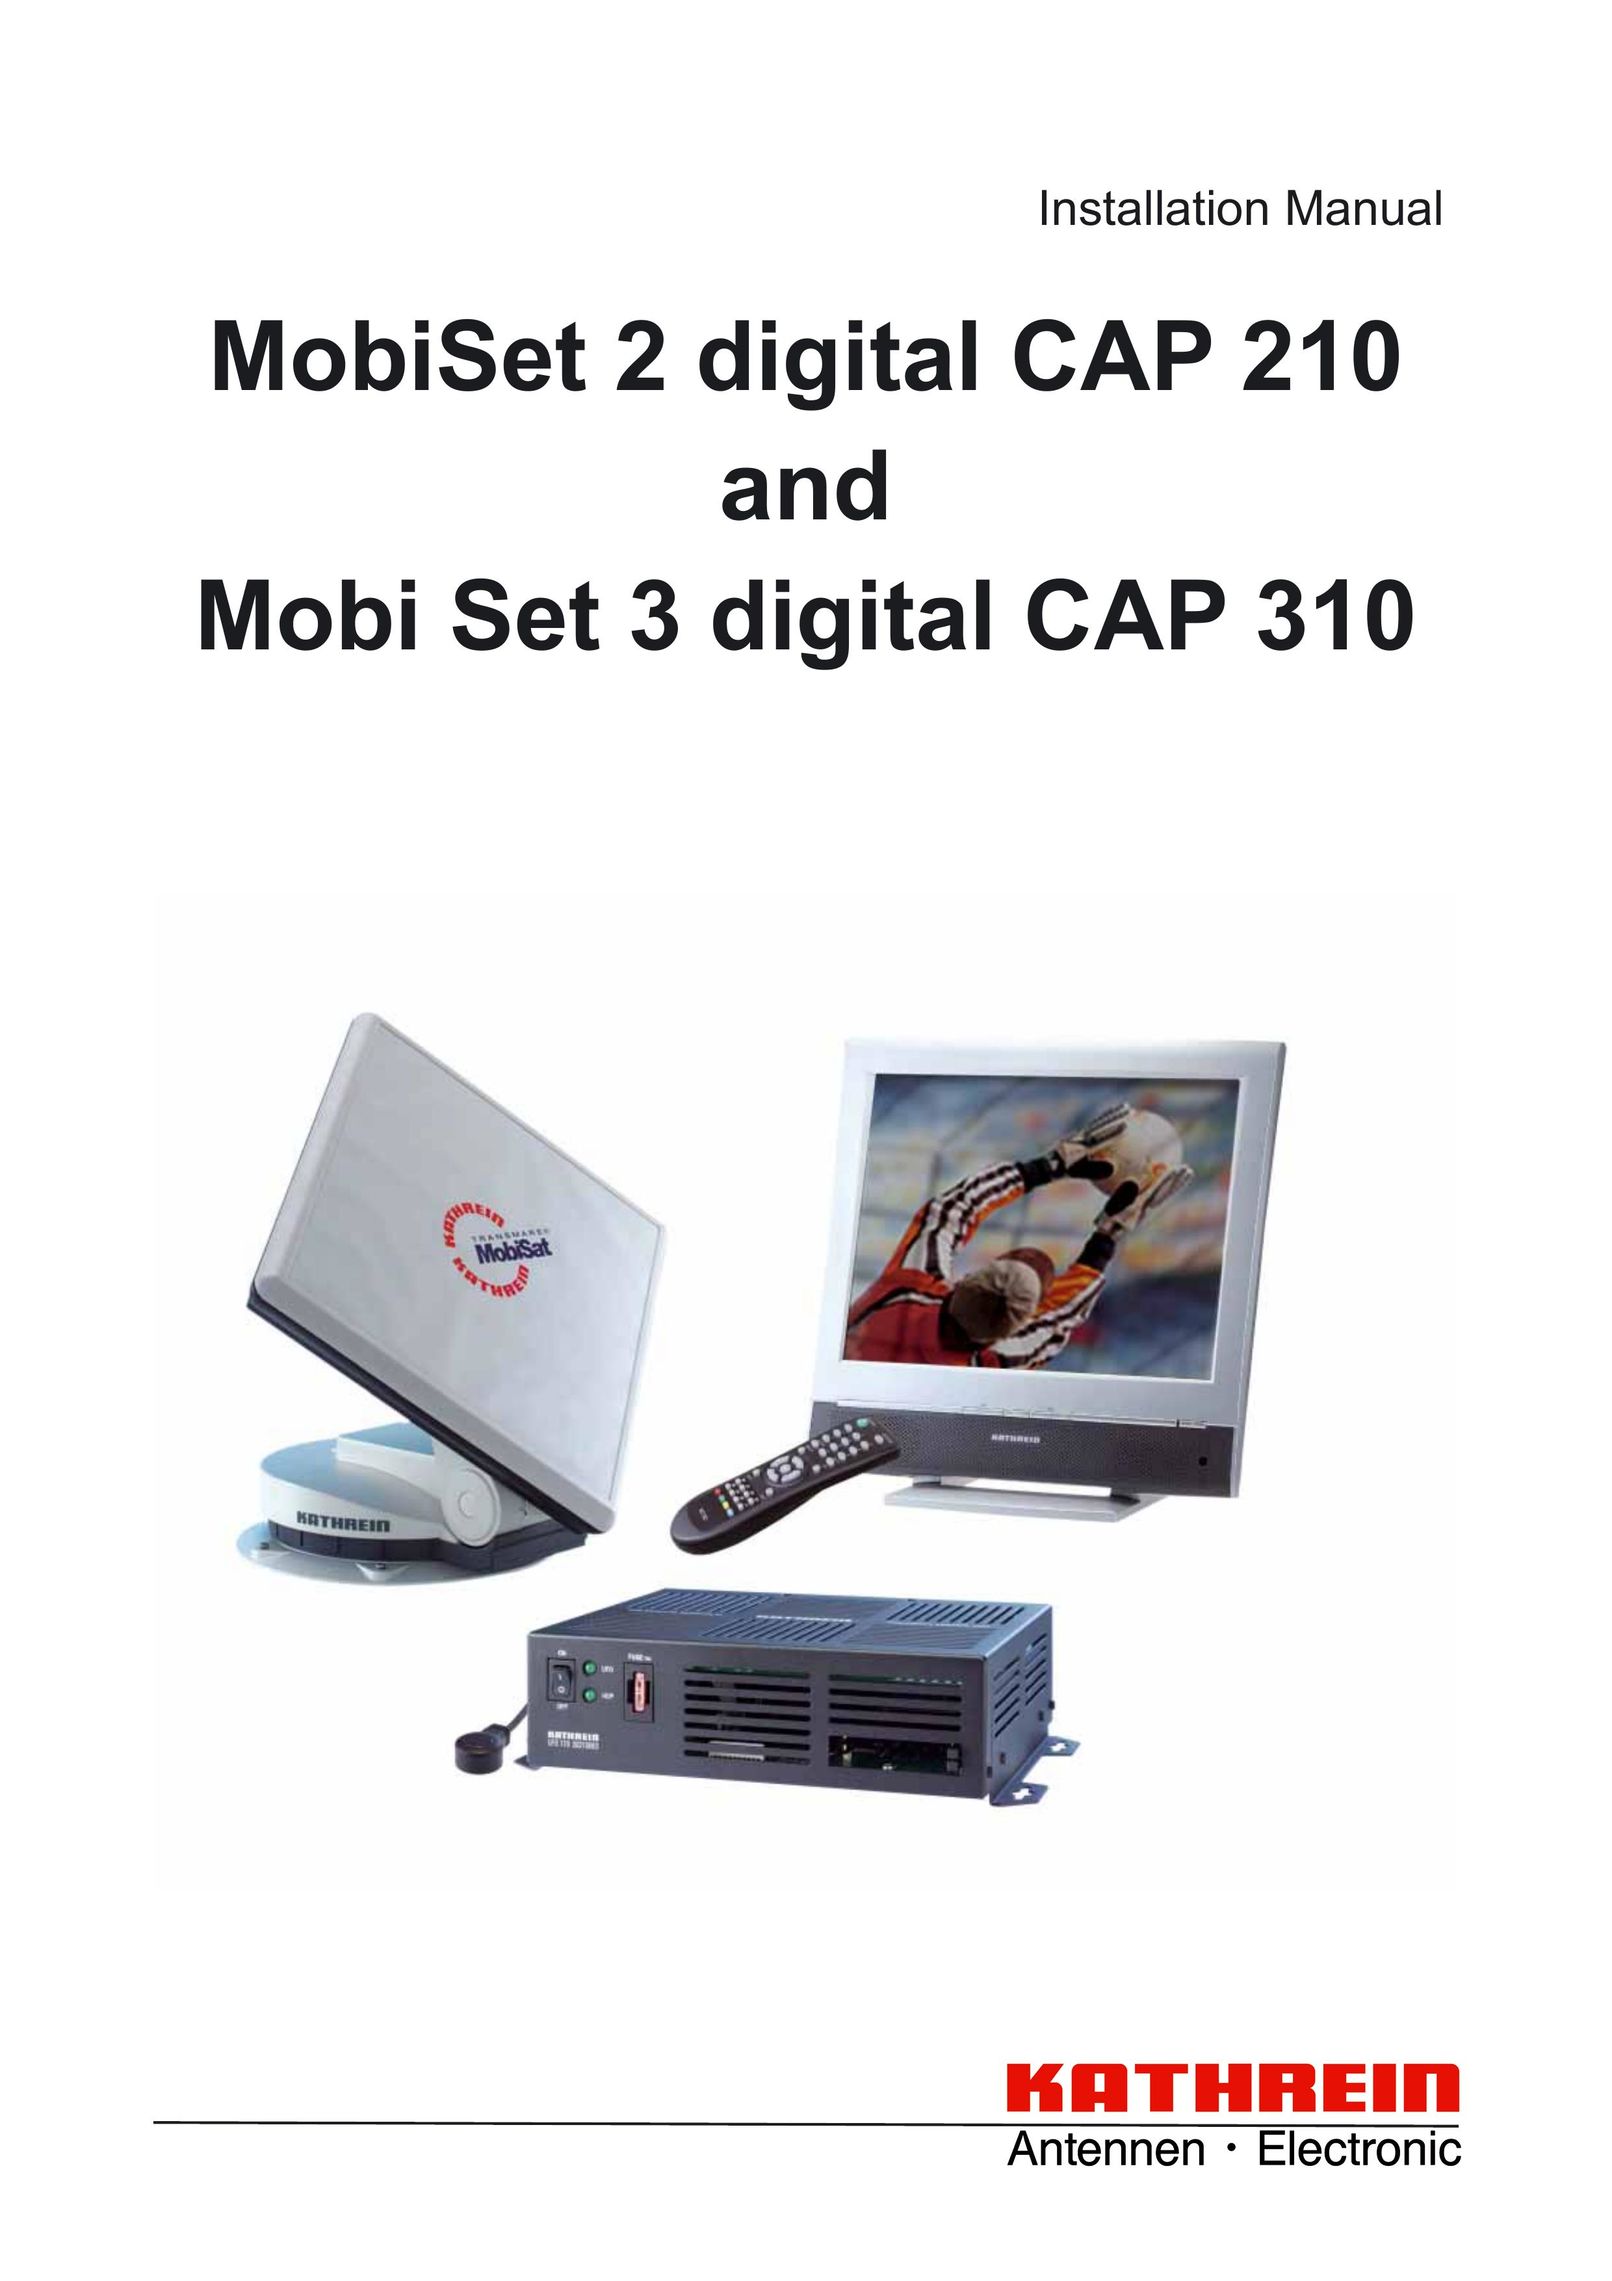 Kathrein CAP 210 Satellite TV System User Manual